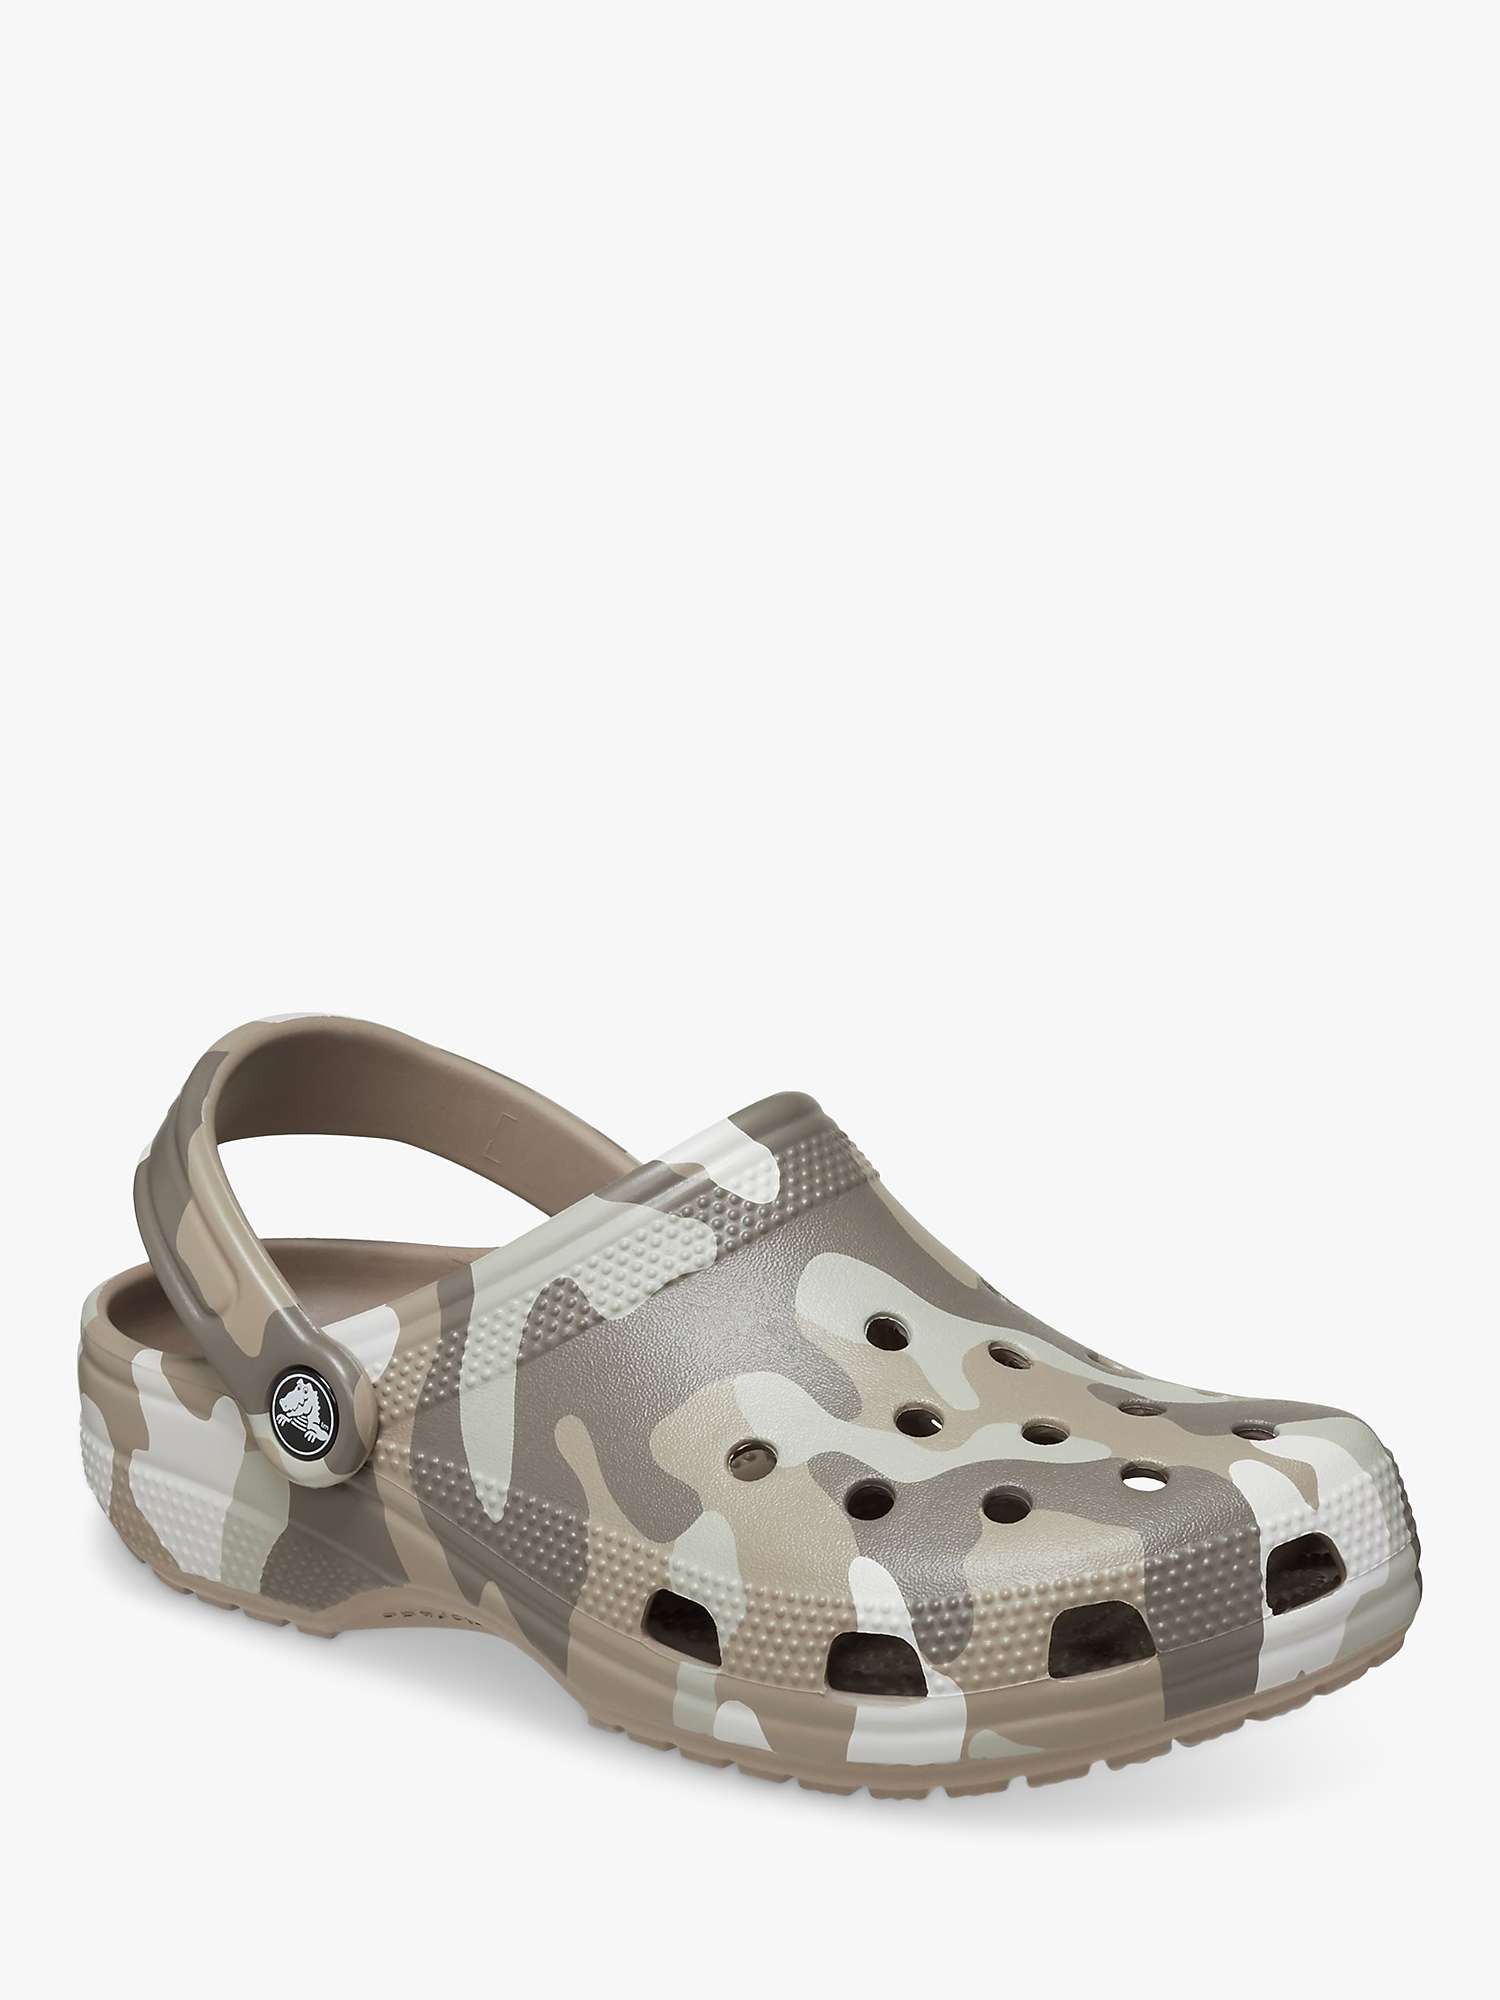 Buy Crocs Seasonal Camouflage Clogs Online at johnlewis.com